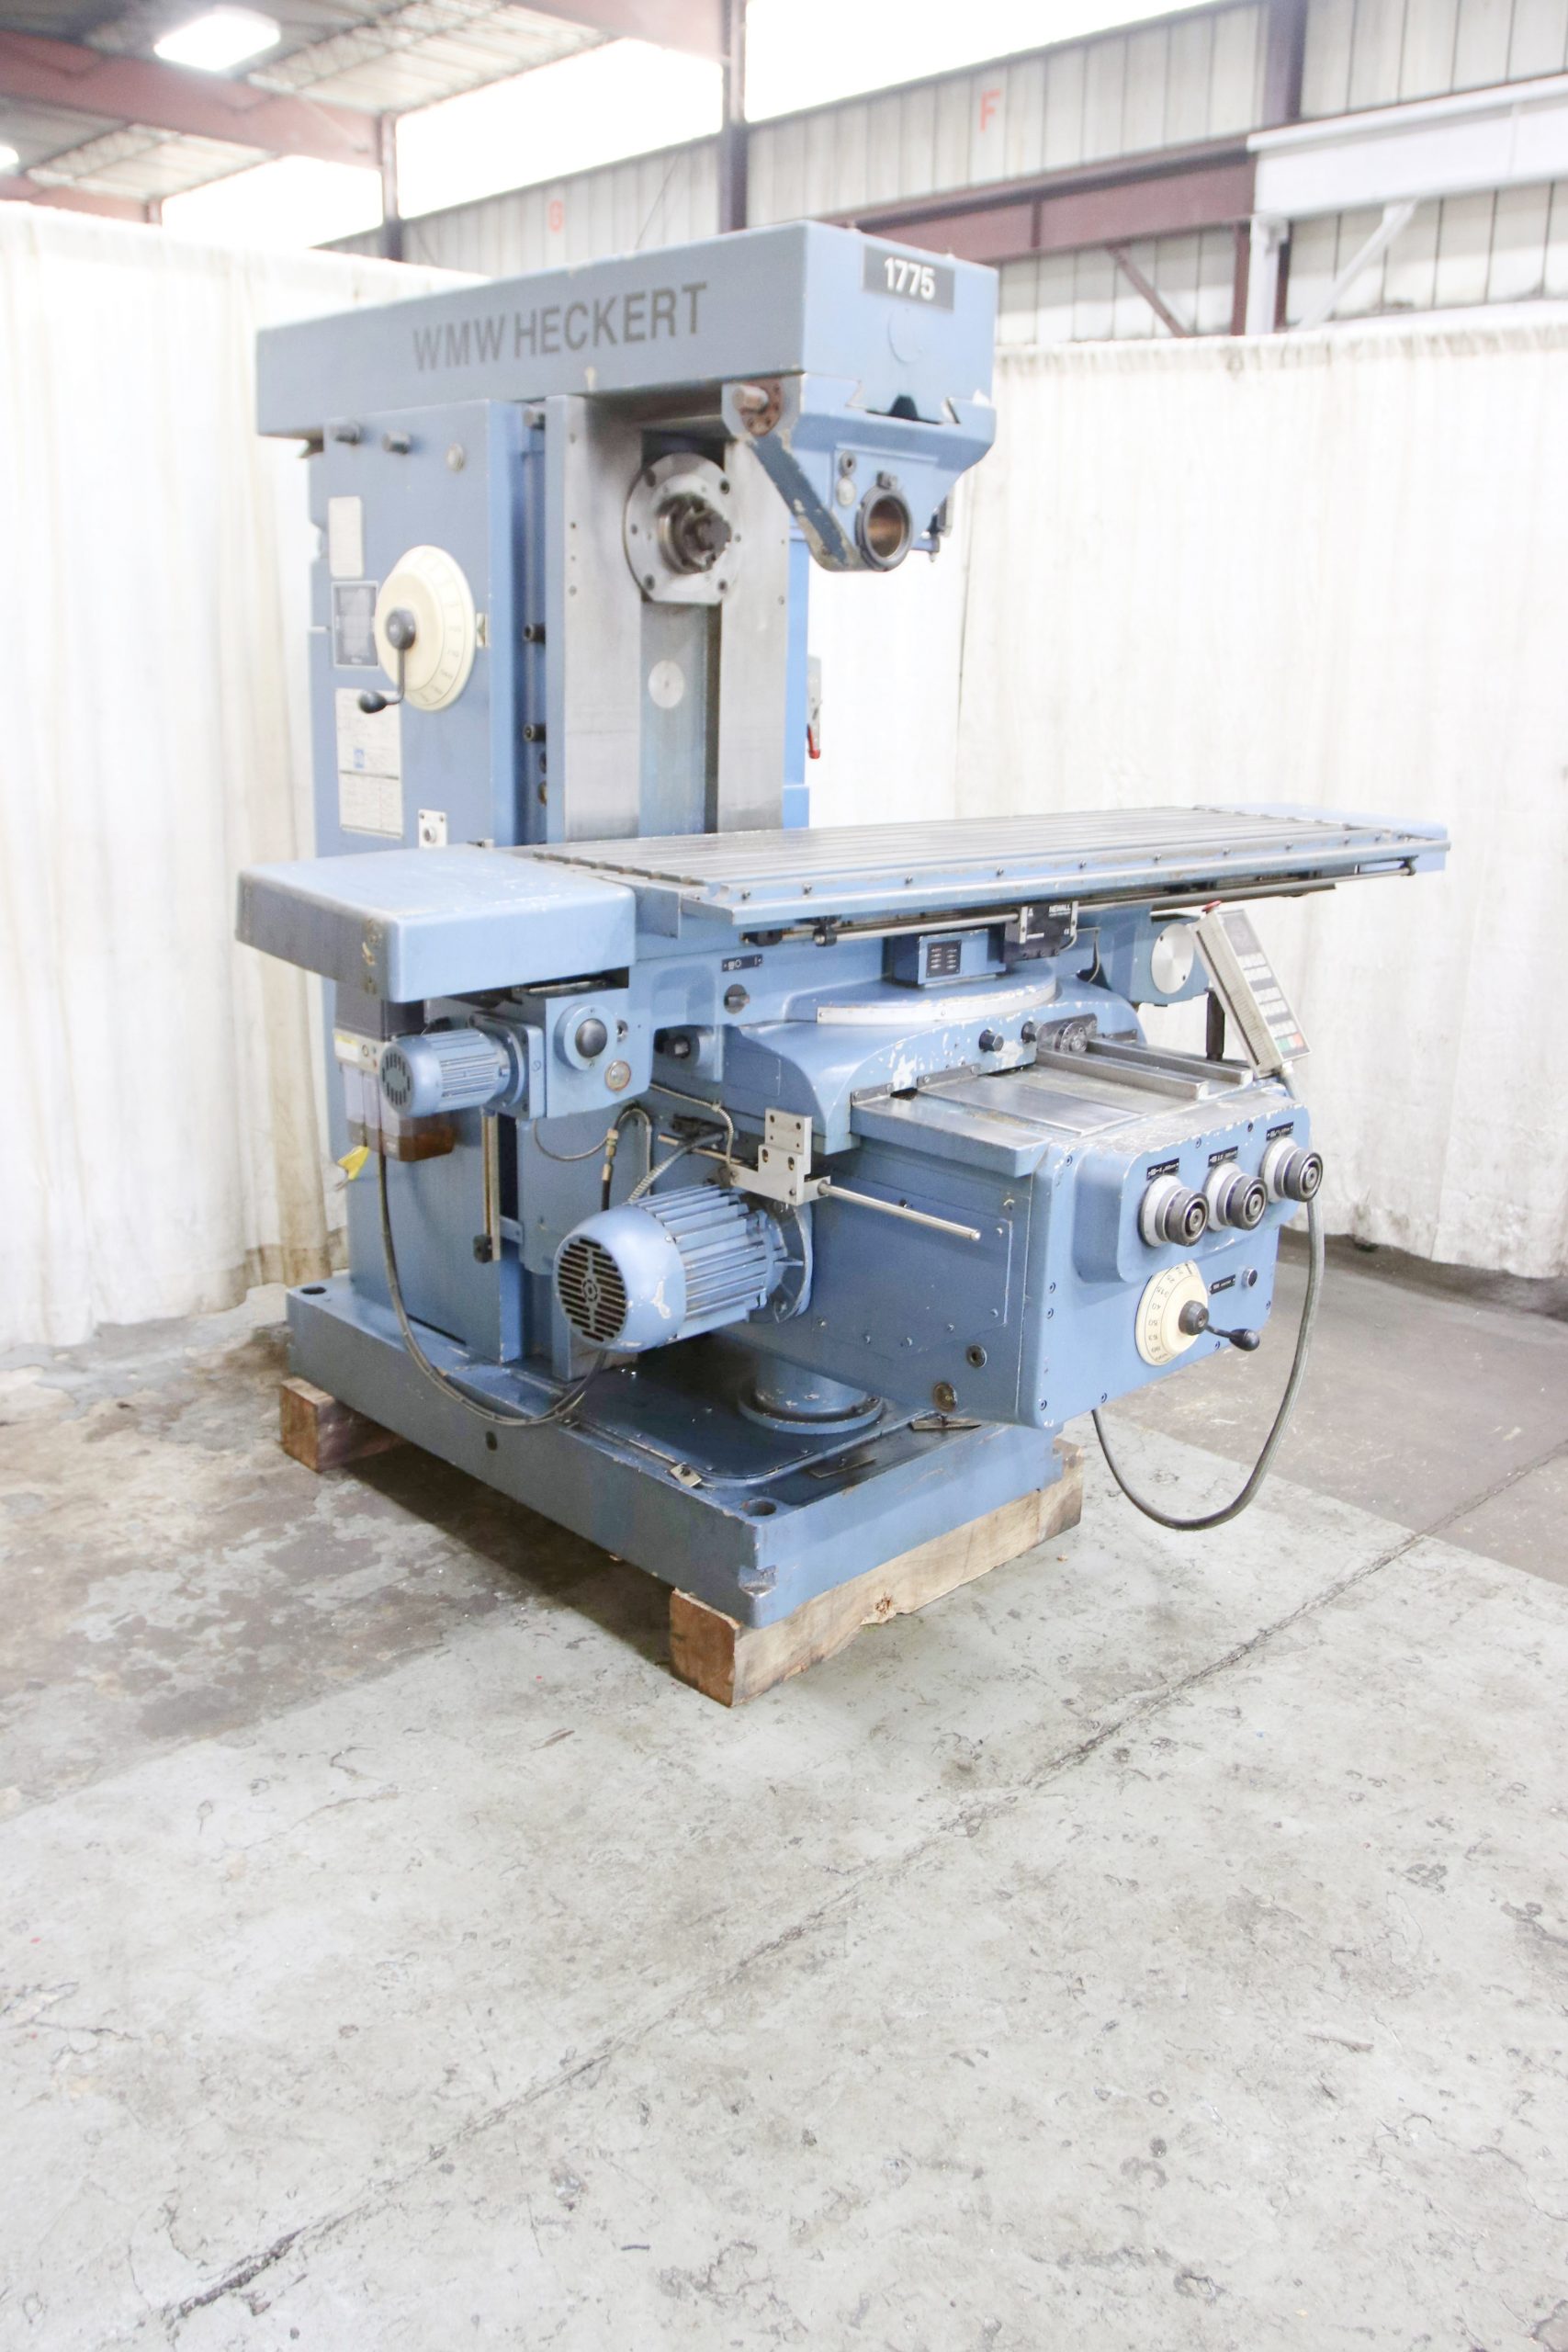 Heckert Model #FU450X1800 Horizontal Mill (used) Item # UE-081221I (Ohio)